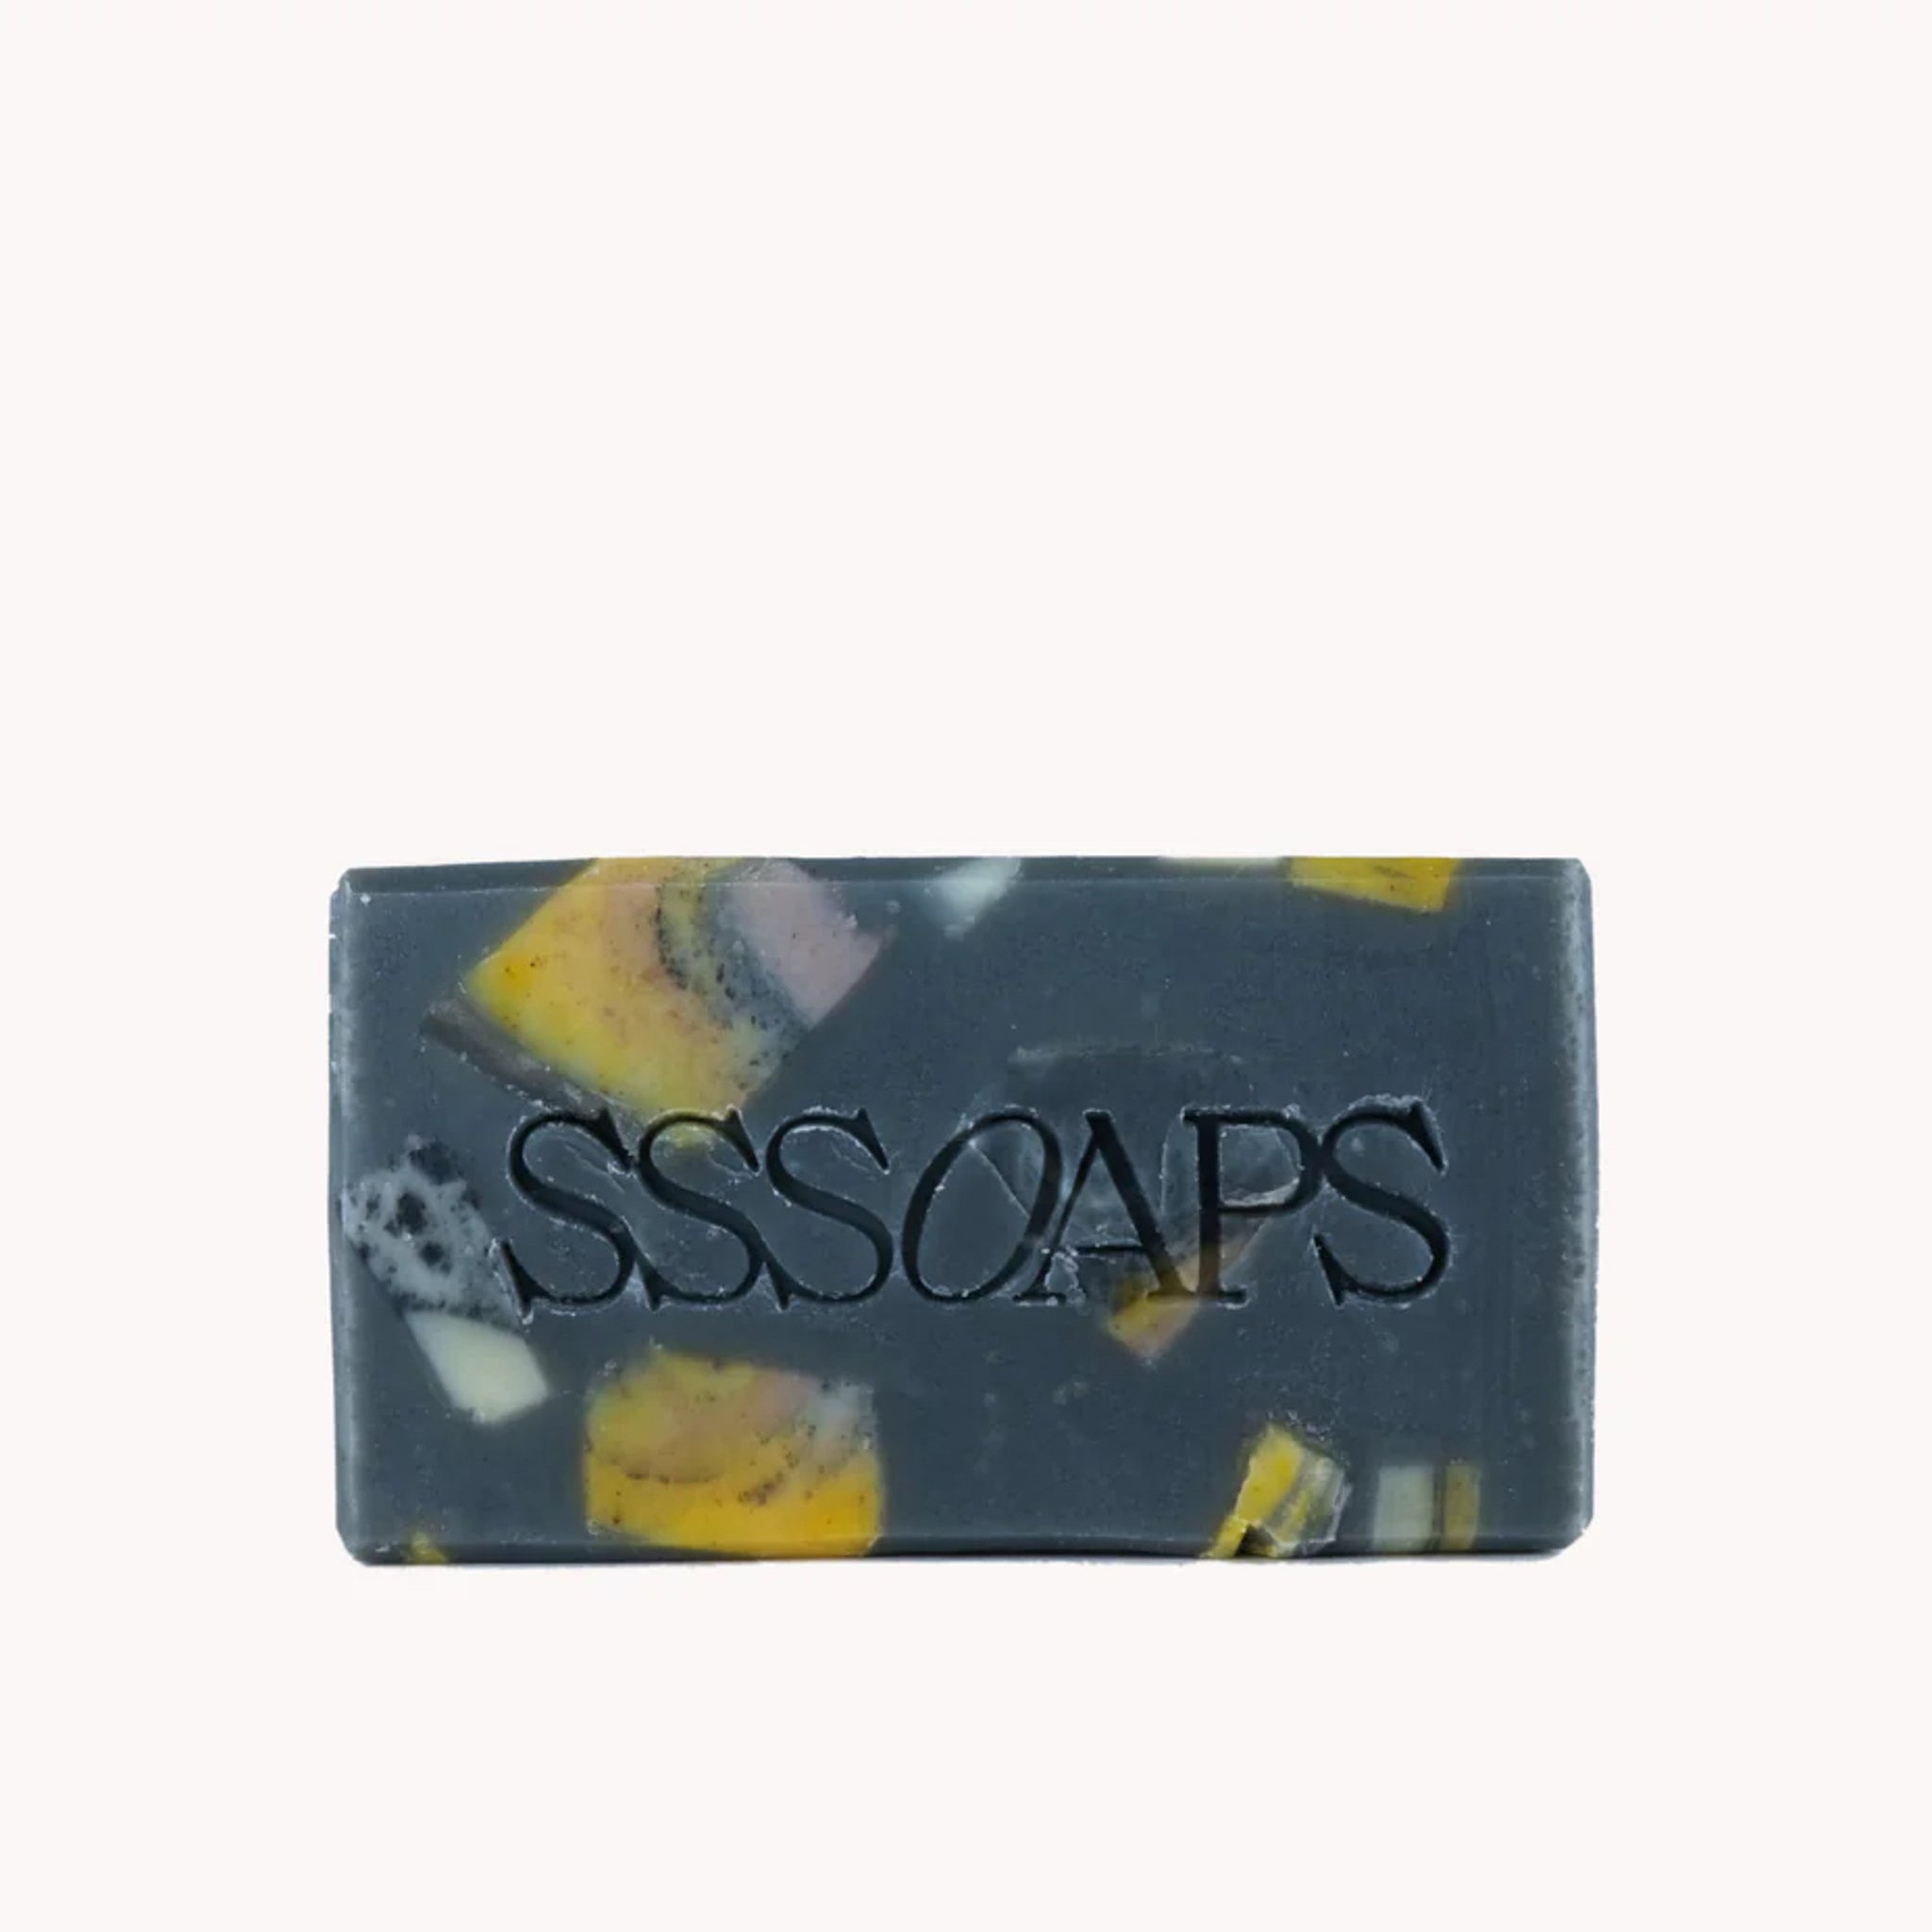 SSSOAPS - Batch 094 Charcoal